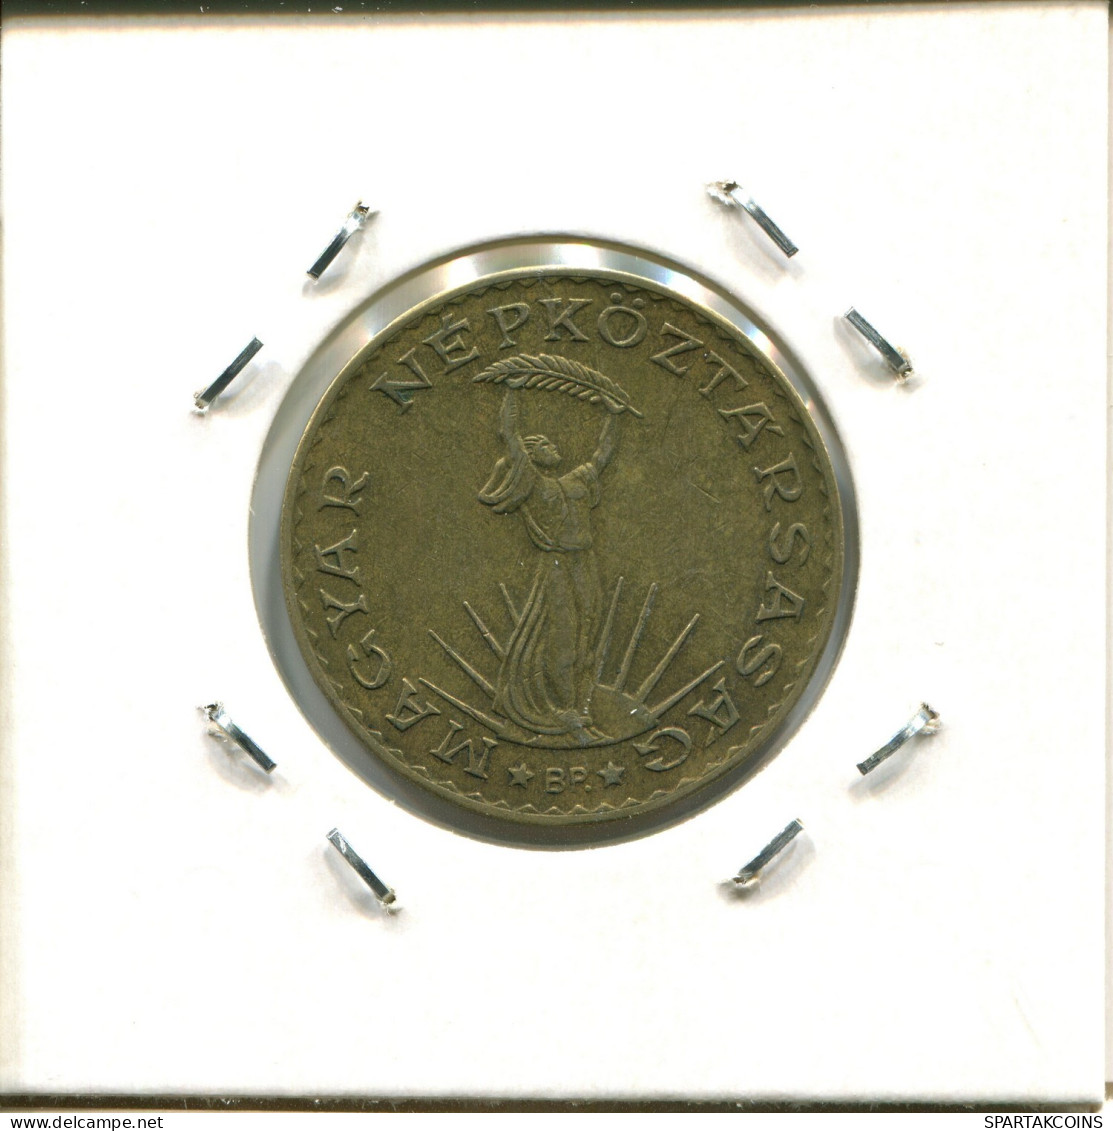 10 FORINT 1988 HUNGARY Coin #AY146.2.U.A - Hungary